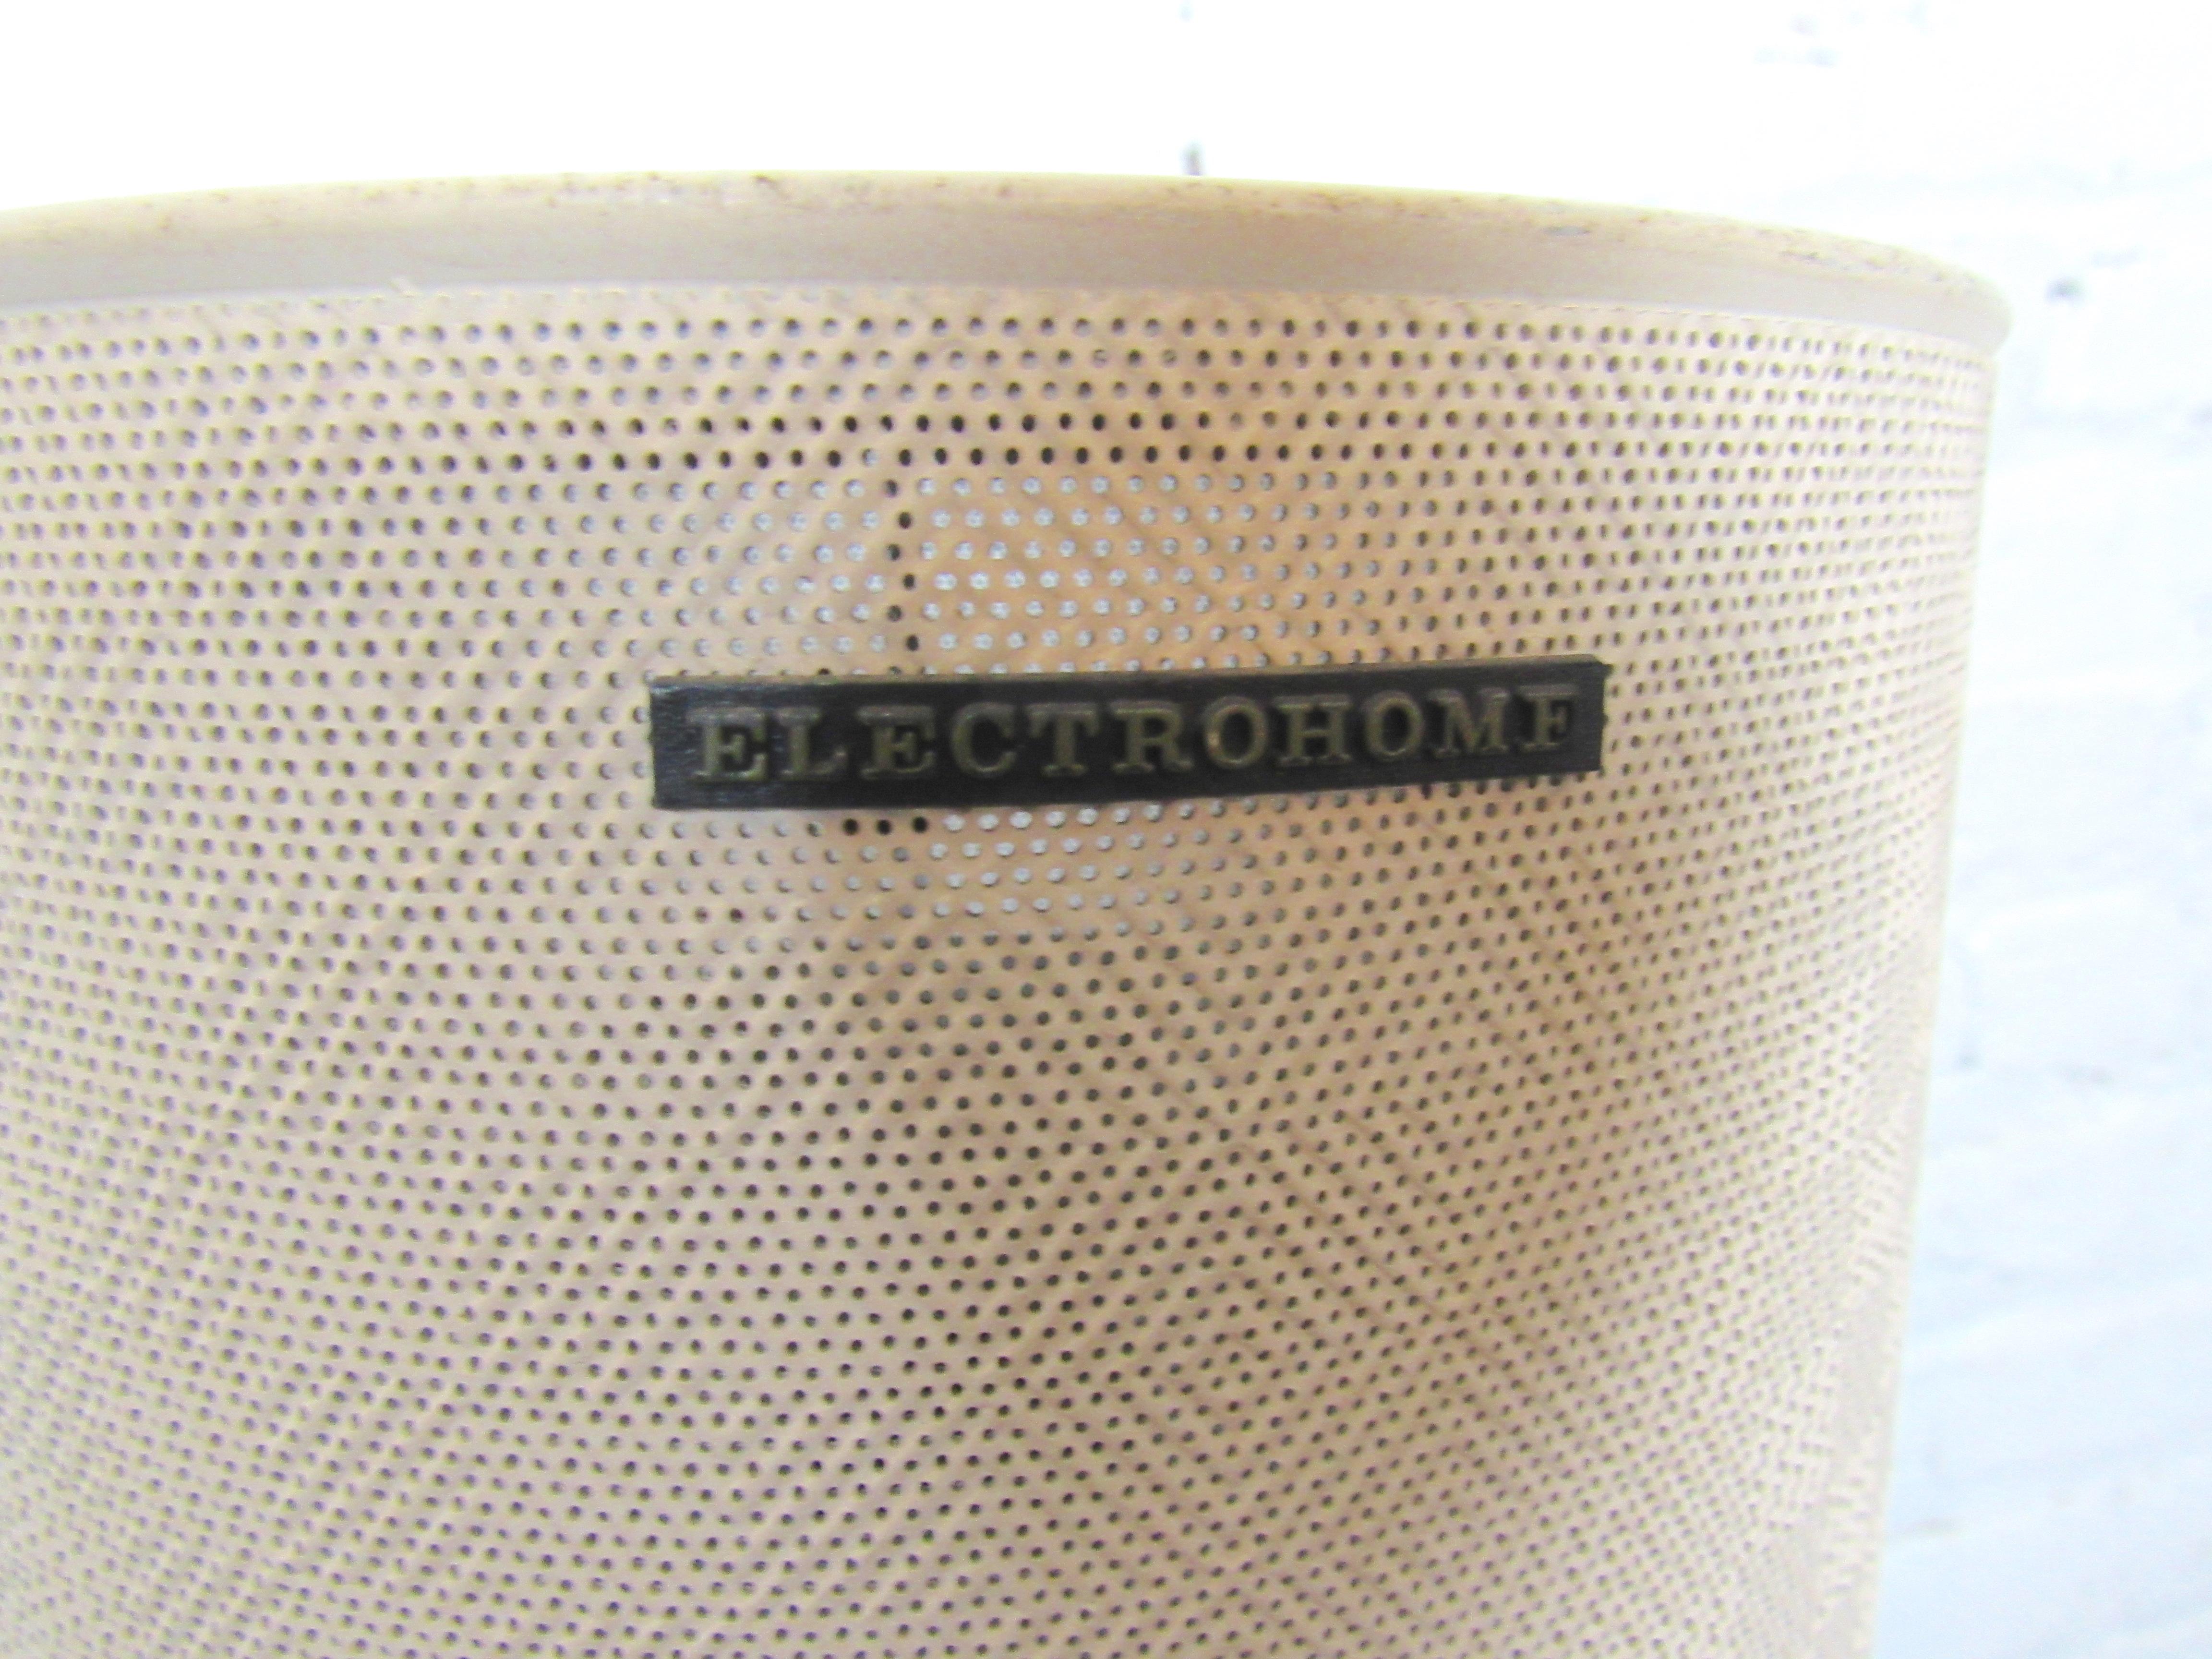 electrohome speakers vintage